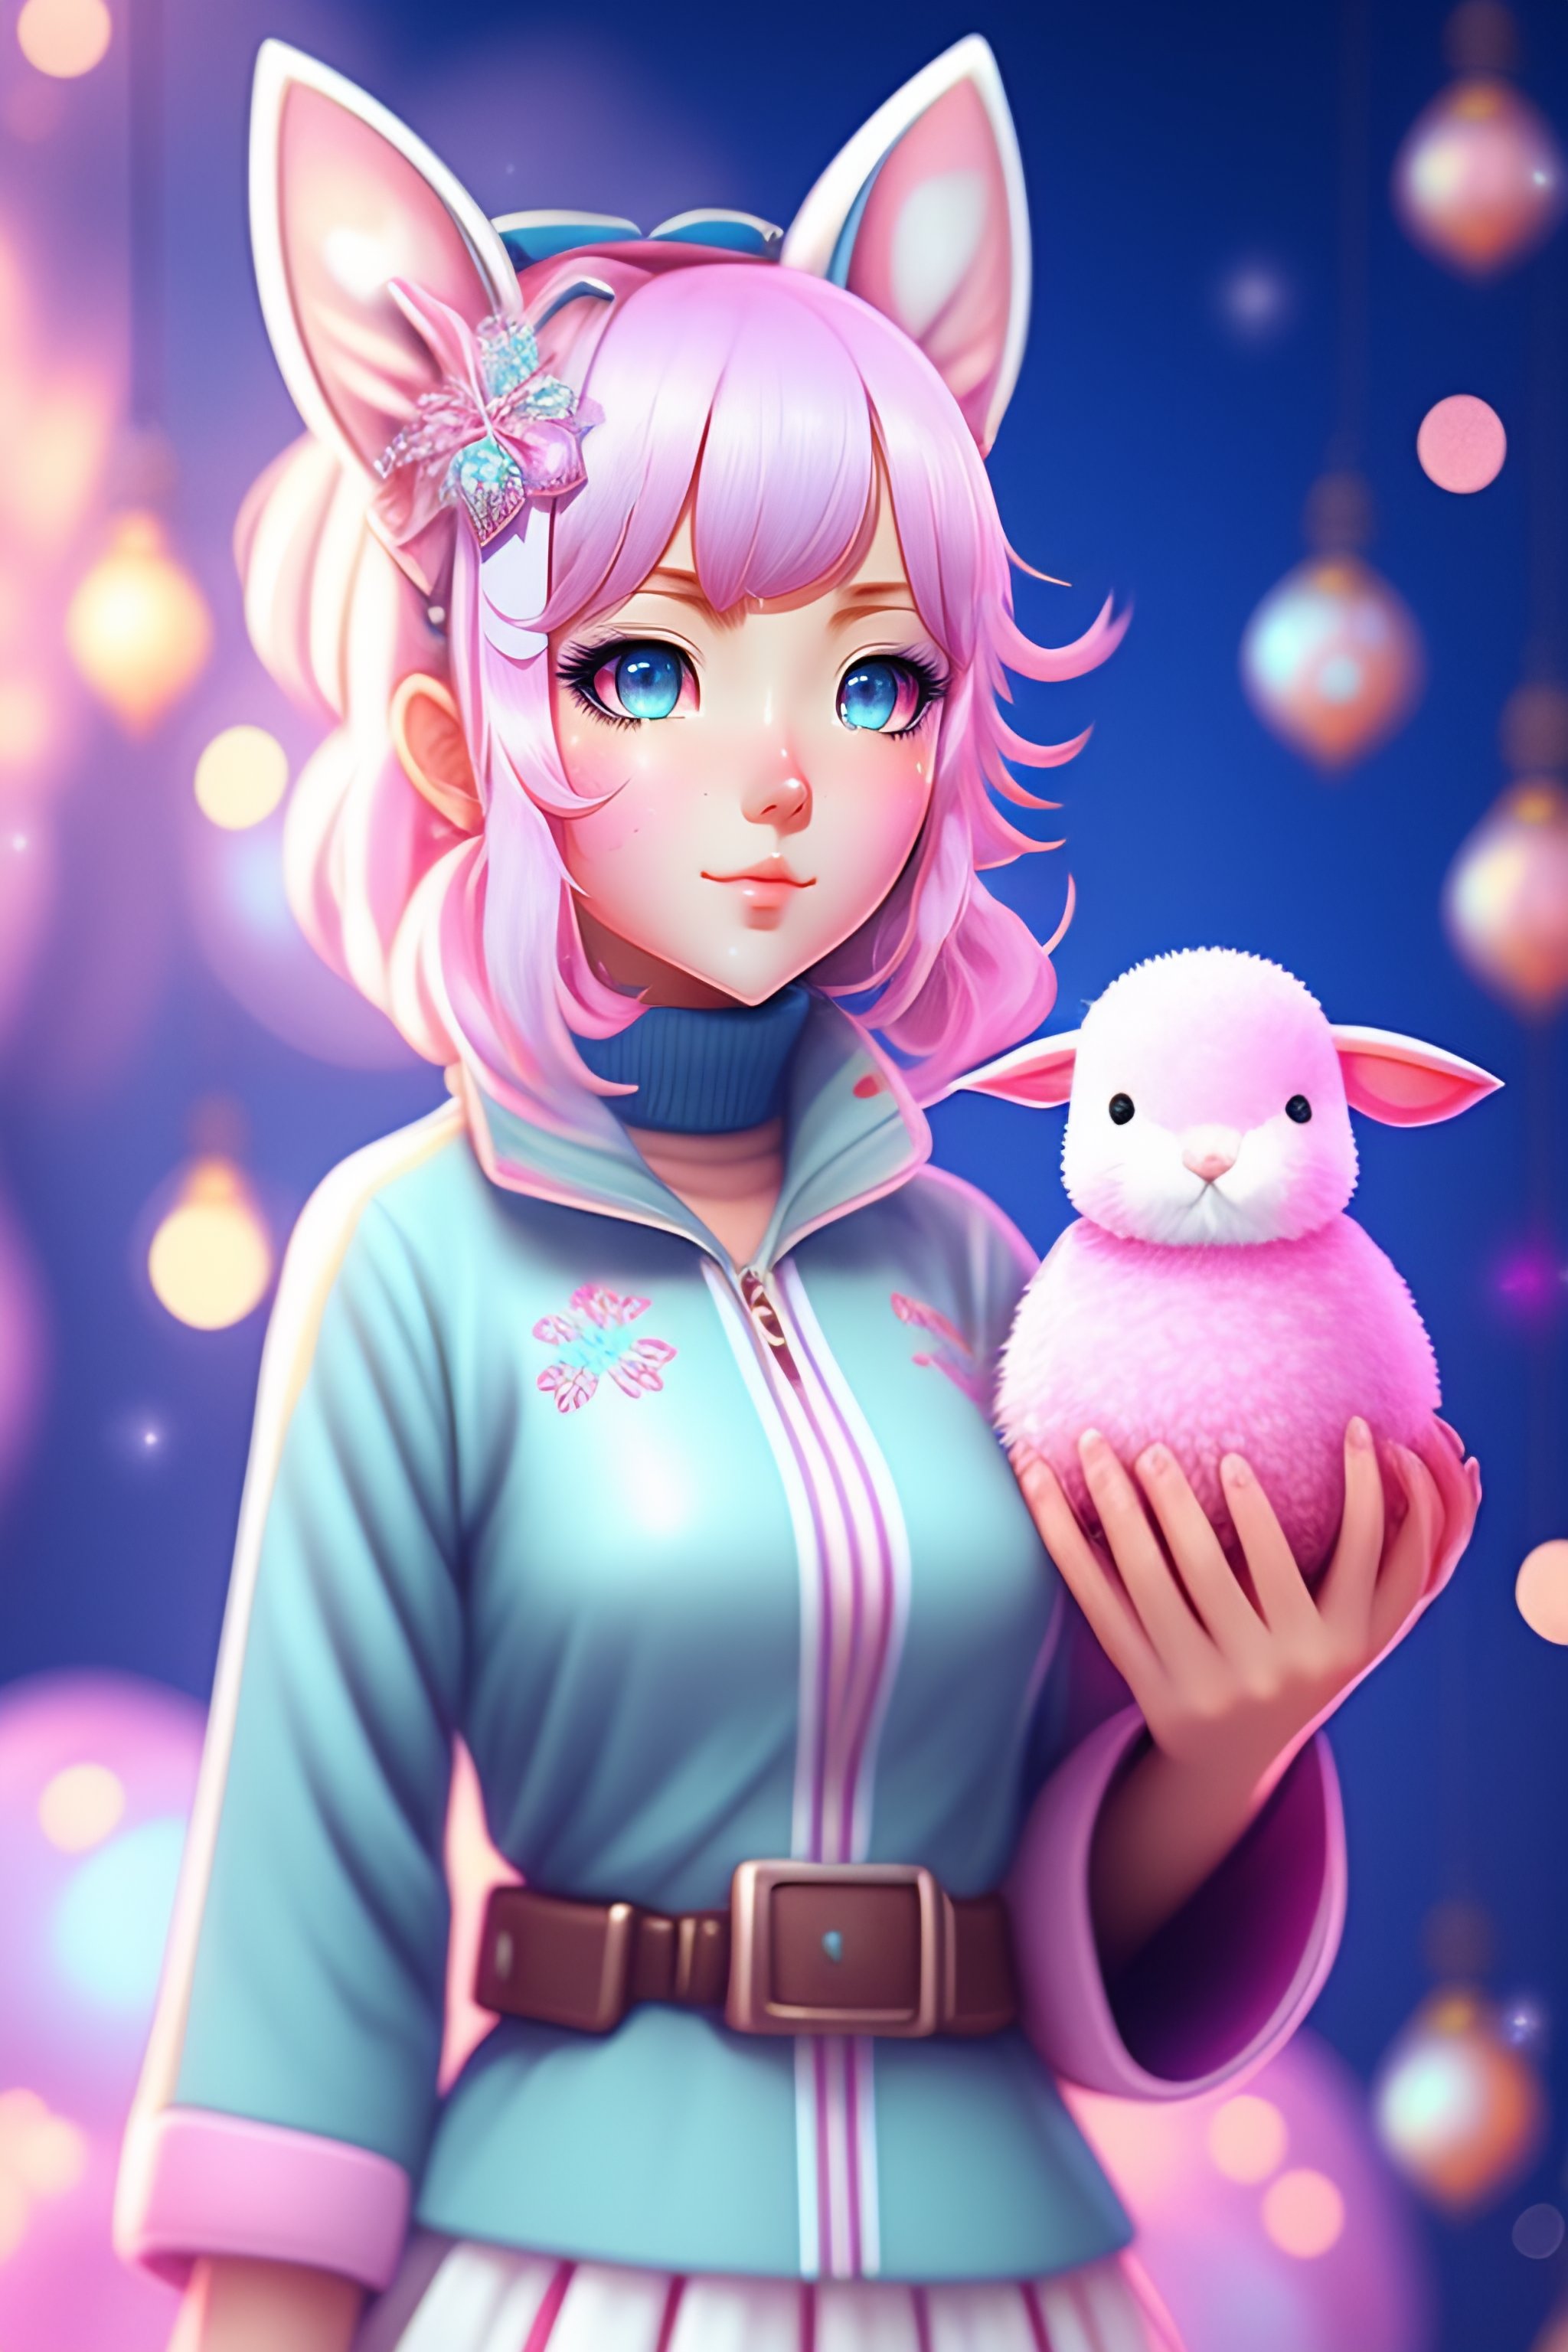 Lexica - Anime,wallpaper like pencil drawing, digital art of cute kawaii  girl with rabbit ears, light blue hair,bob,pink eyes,holding a , background